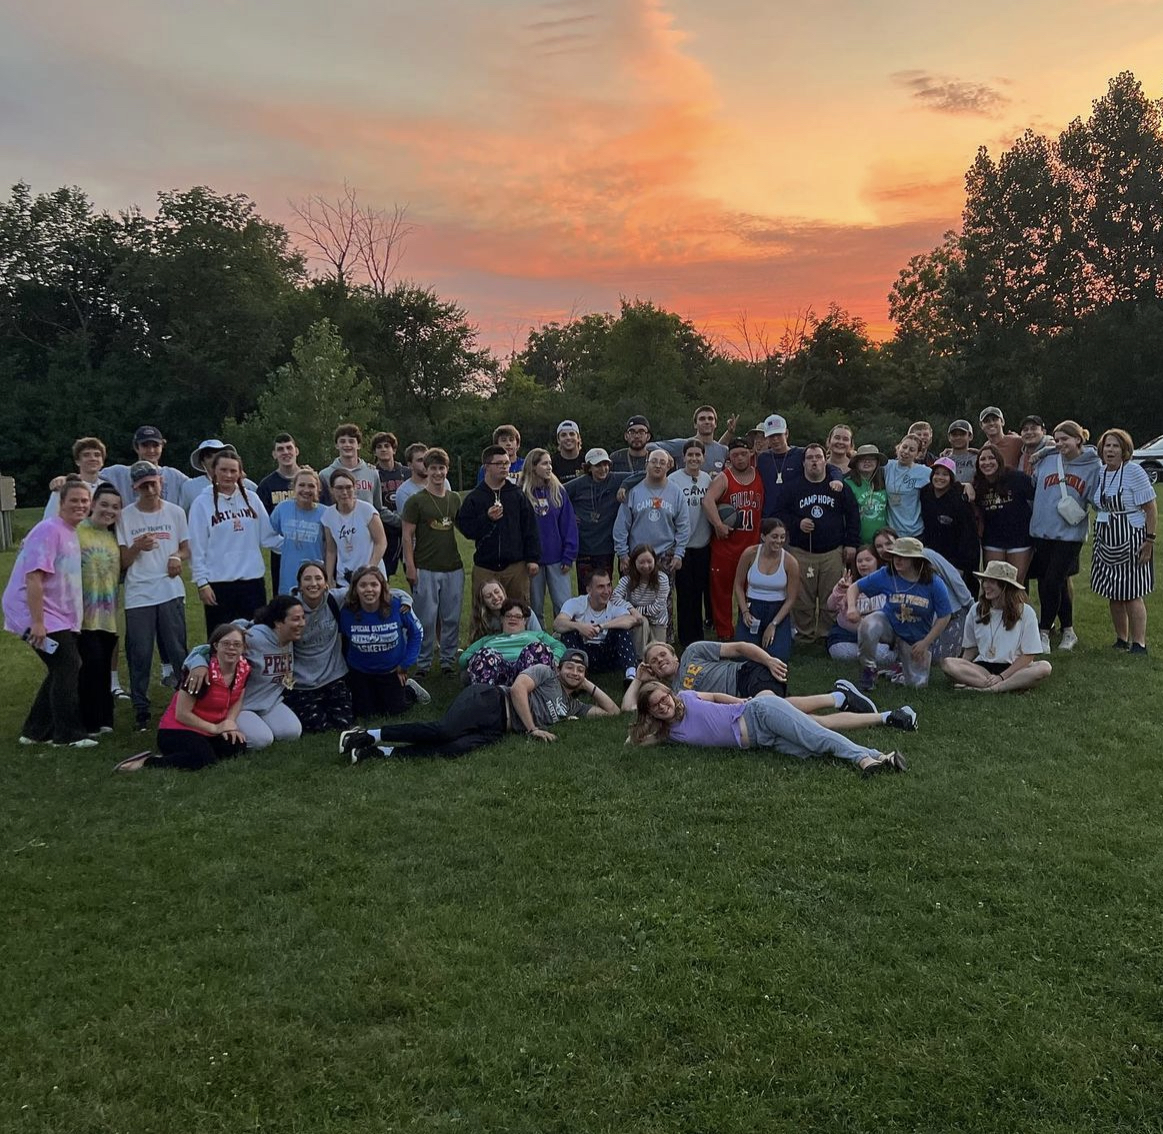 Camp Hope’s summer program enjoying a sunset (@camphopeiIllinois on Instagram)